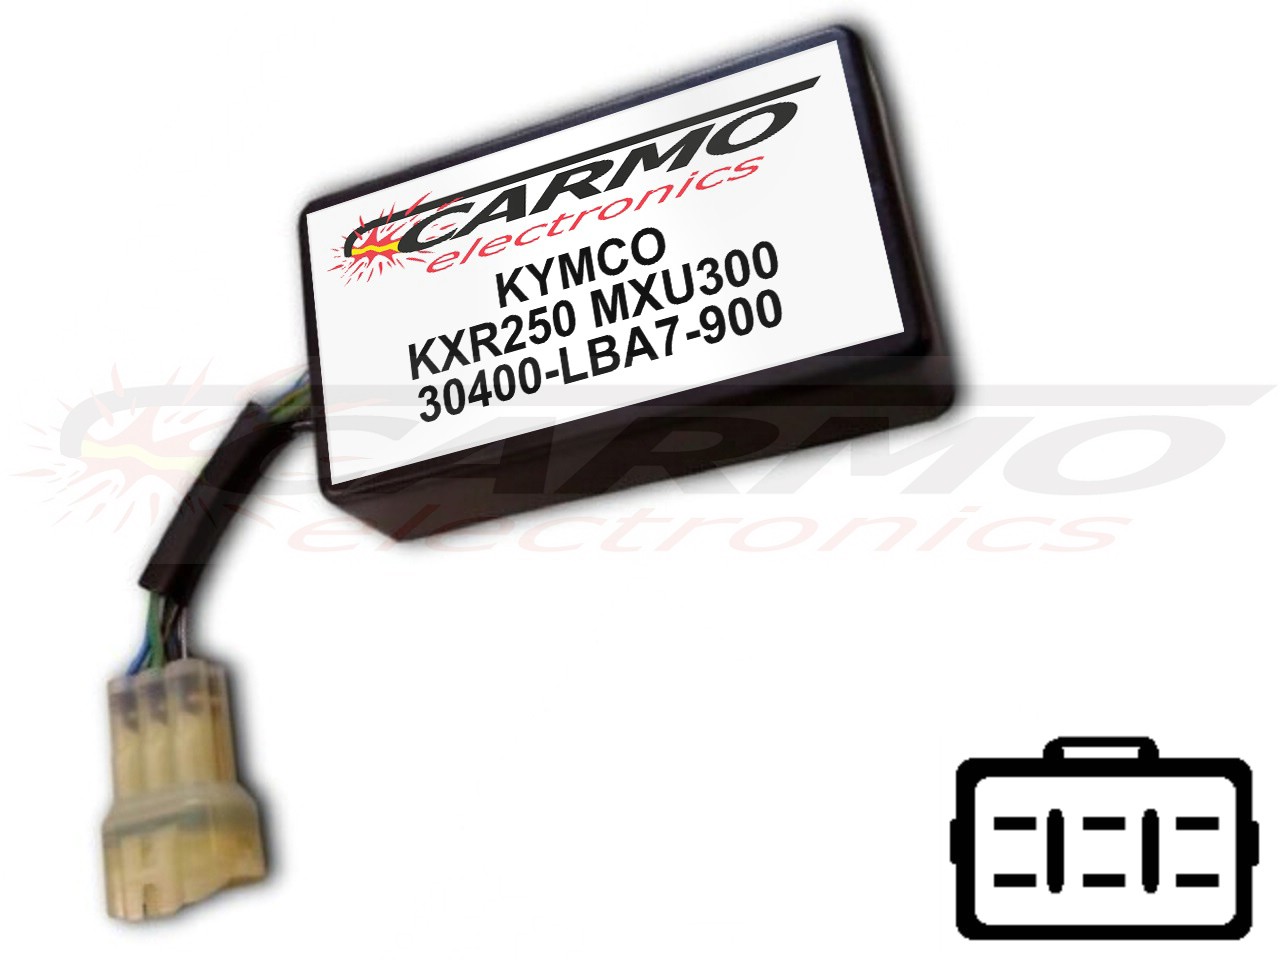 Kymco KXR250 MXU250 CDI unit ECU ontsteking (30400-LBA7-900, CT-LBA7-00) - Klik op de afbeelding om het venster te sluiten